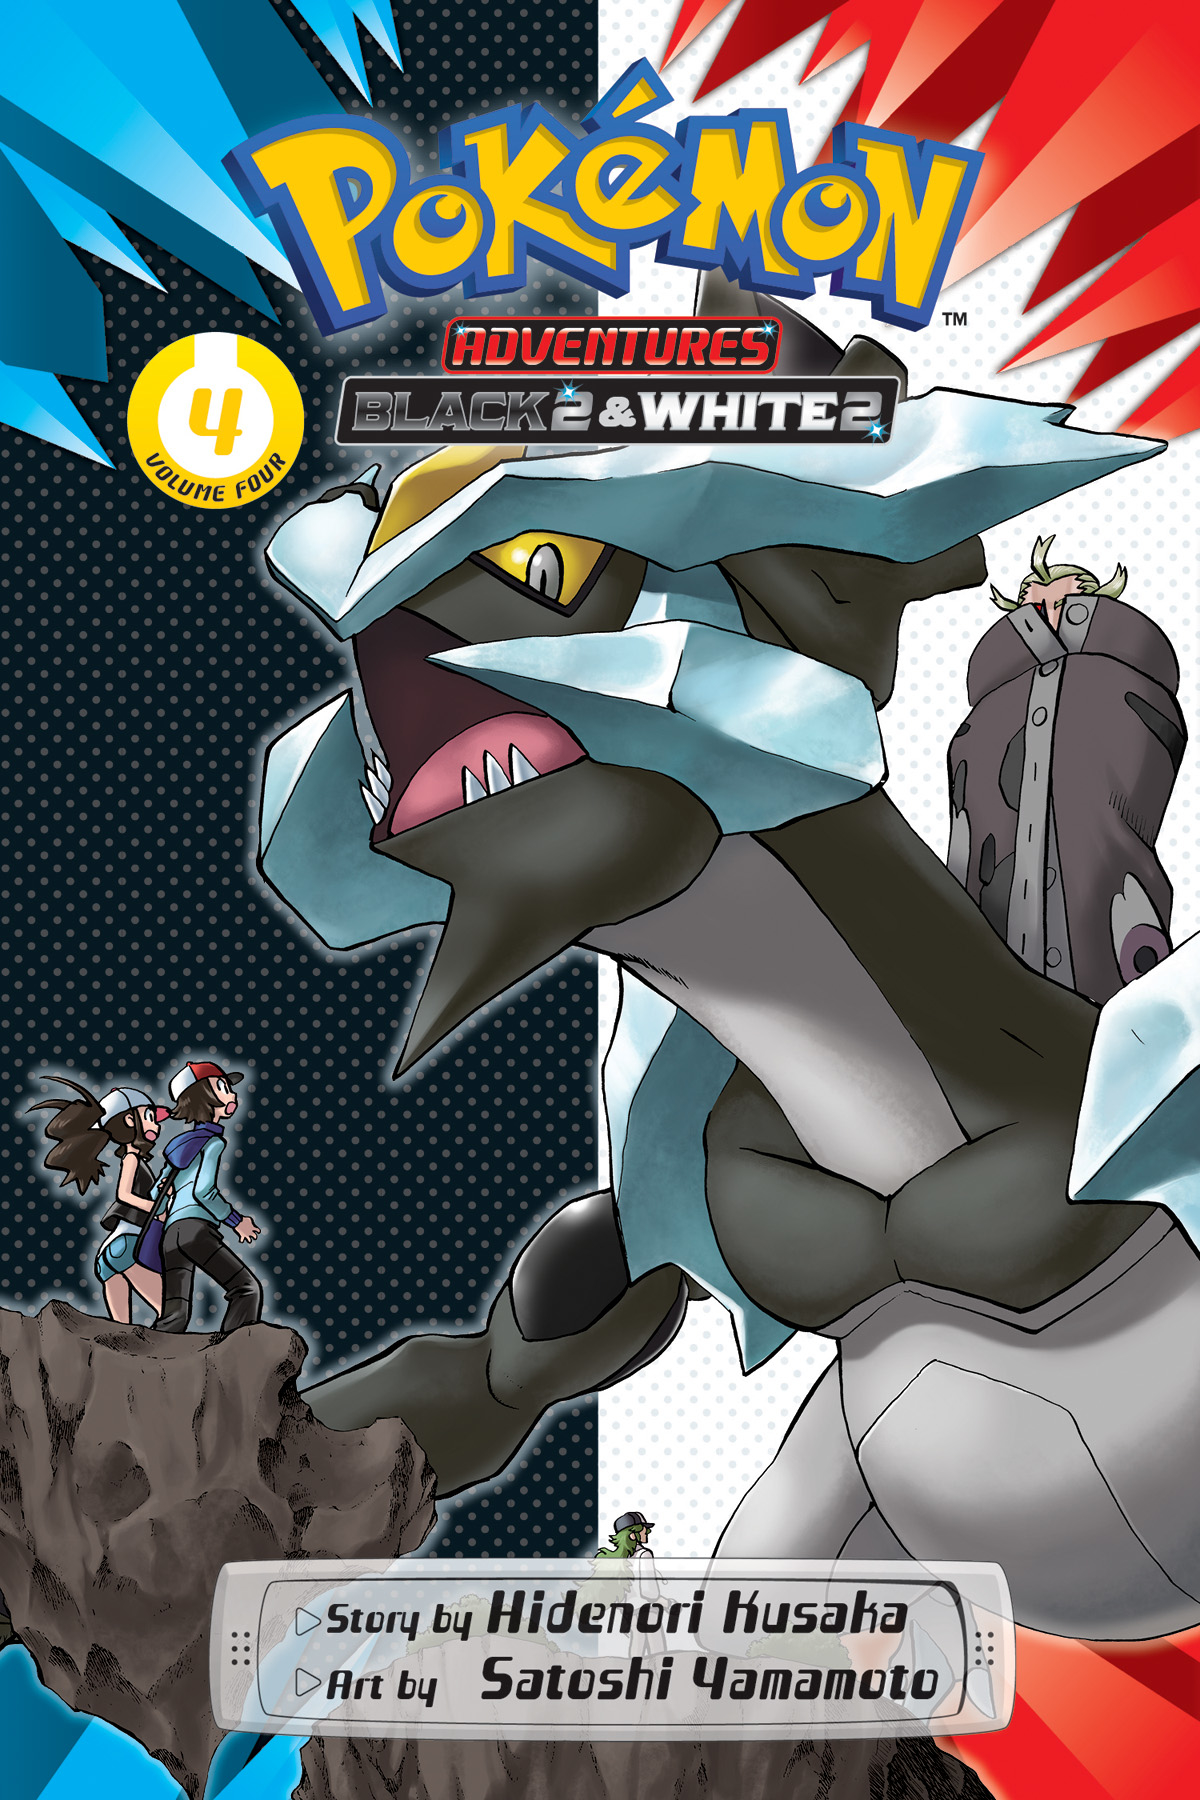 Pokémon Adventure Black & White 2 Manga Volume 4